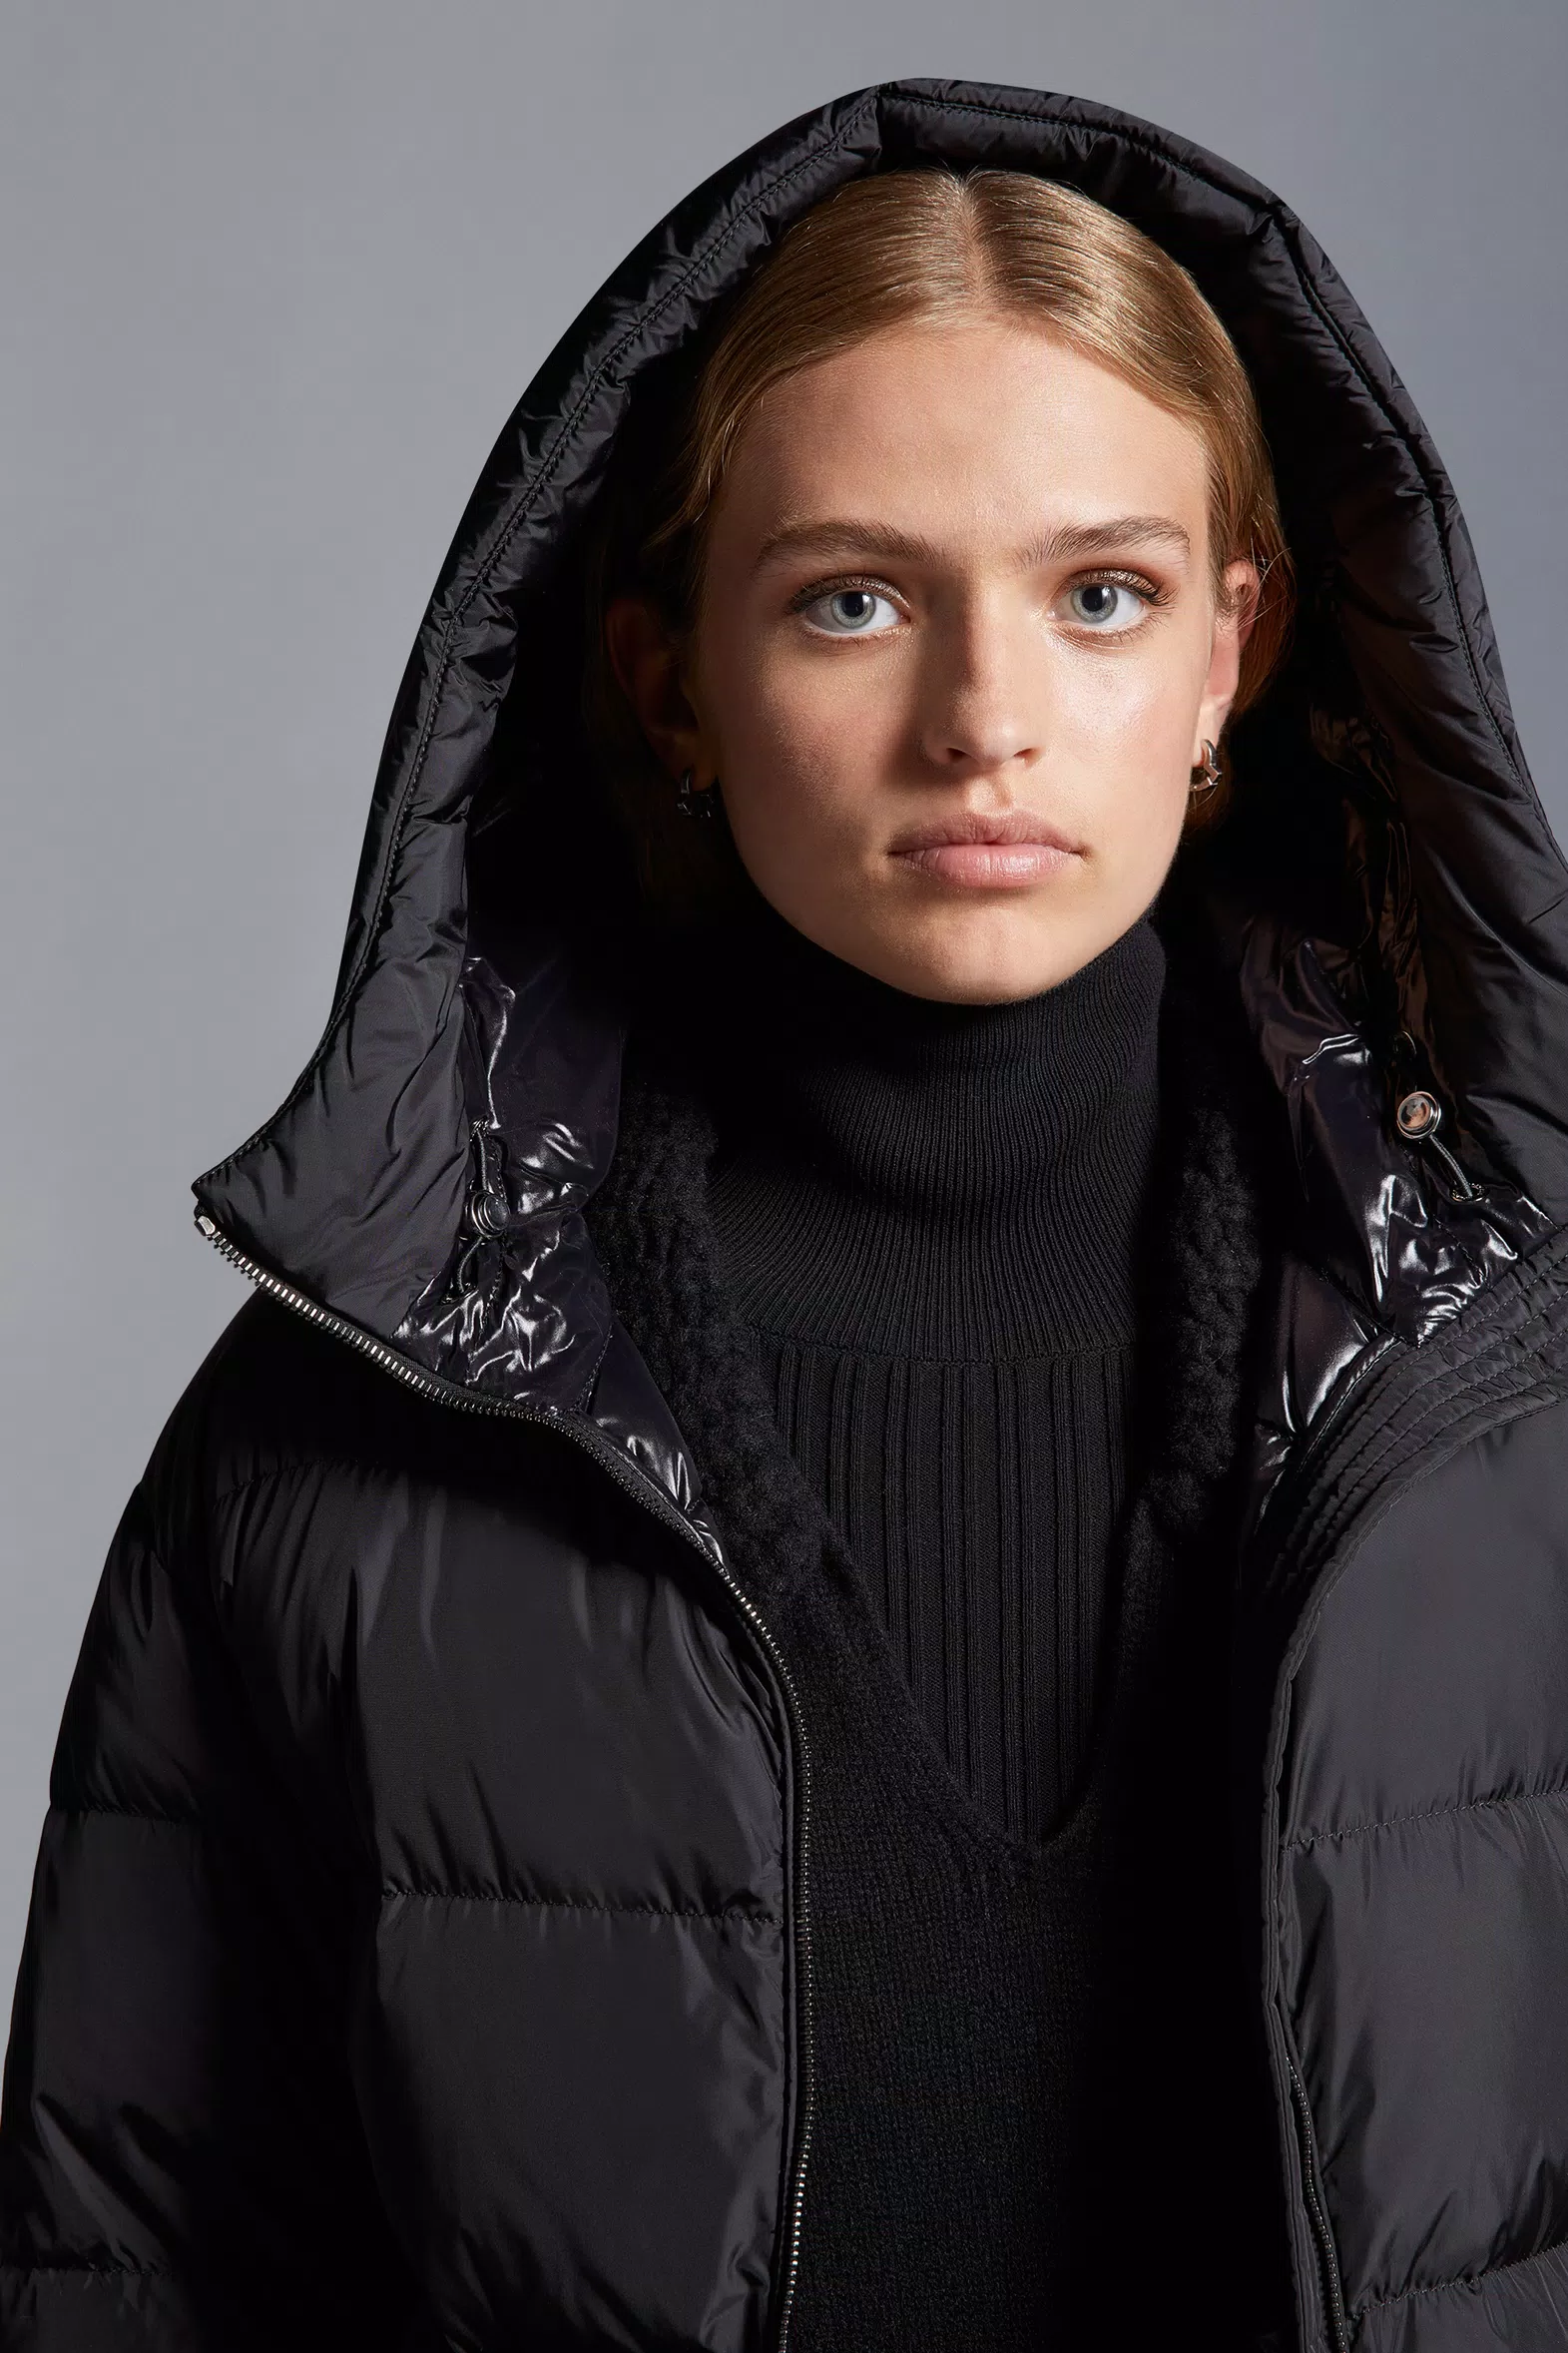 Black Bondree Long Down Jacket - Long Down Jackets for Women | Moncler IT